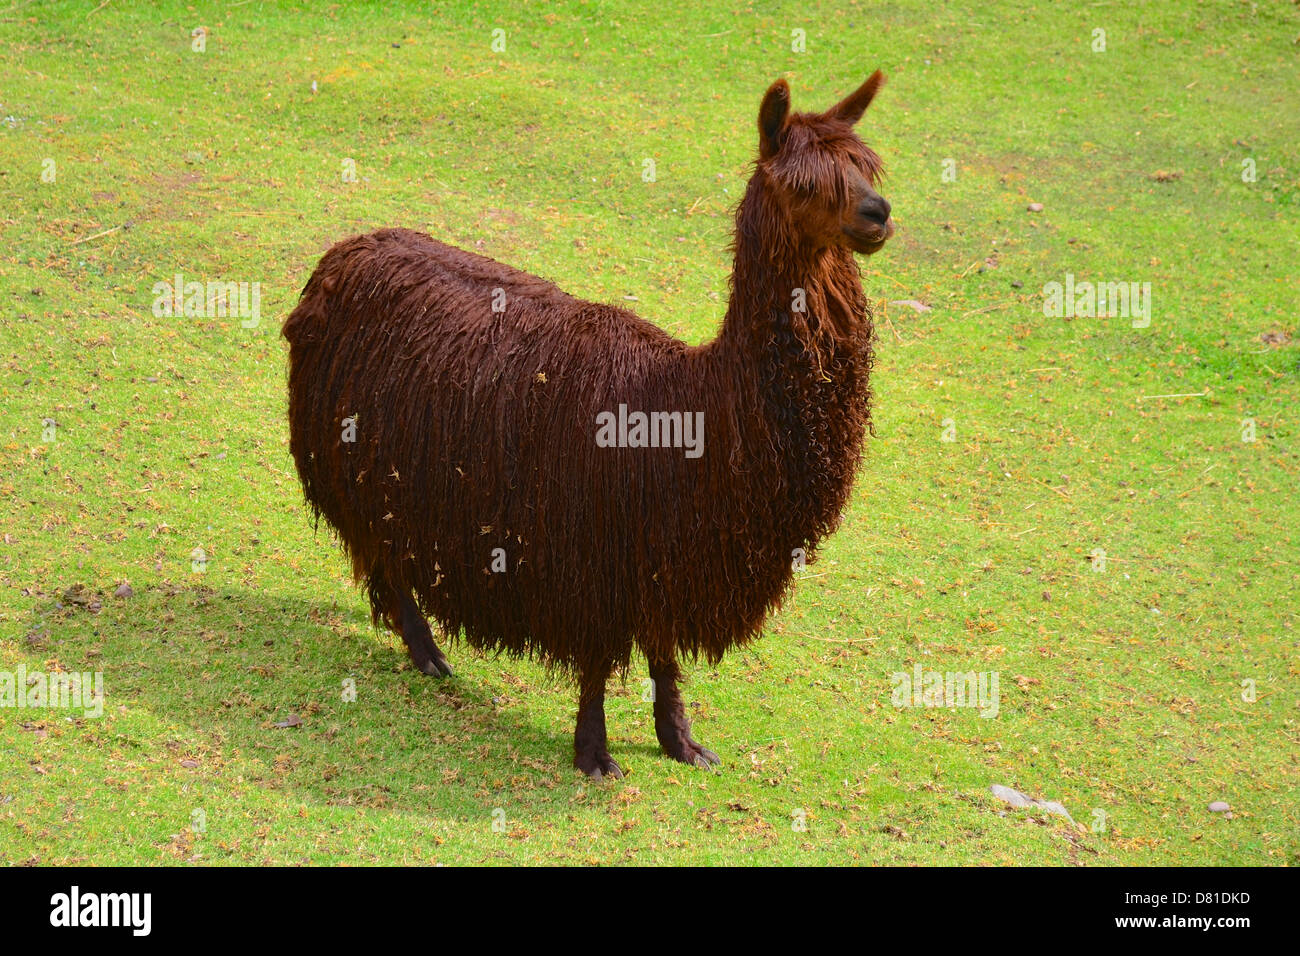 a long-haired Alpaca, near Cuzco, Peru Stock Photo